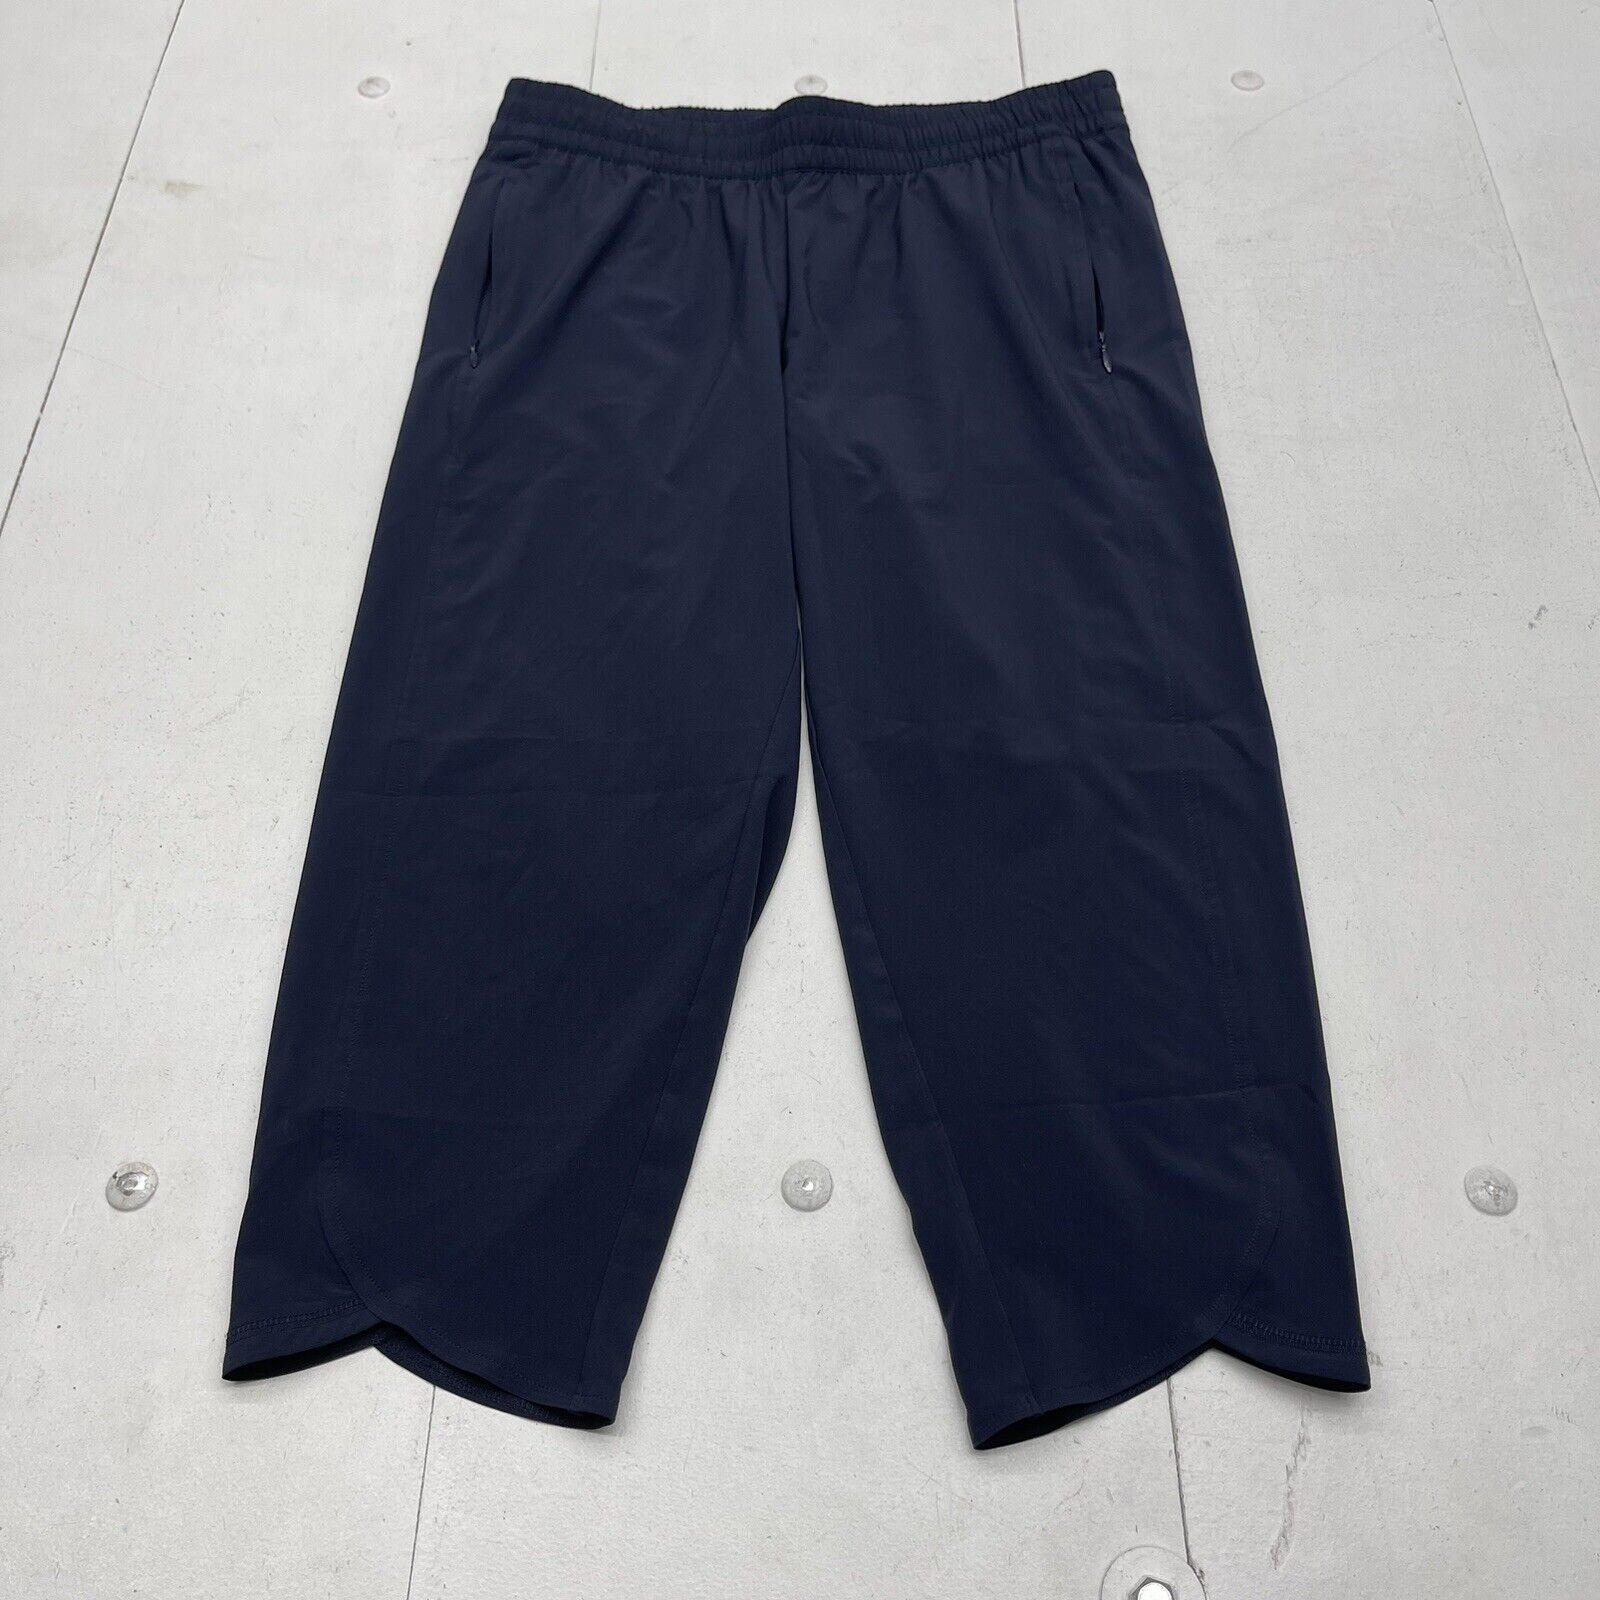 T By Talbots Navy Blue Athletic Pants Women's Size Medium Petite